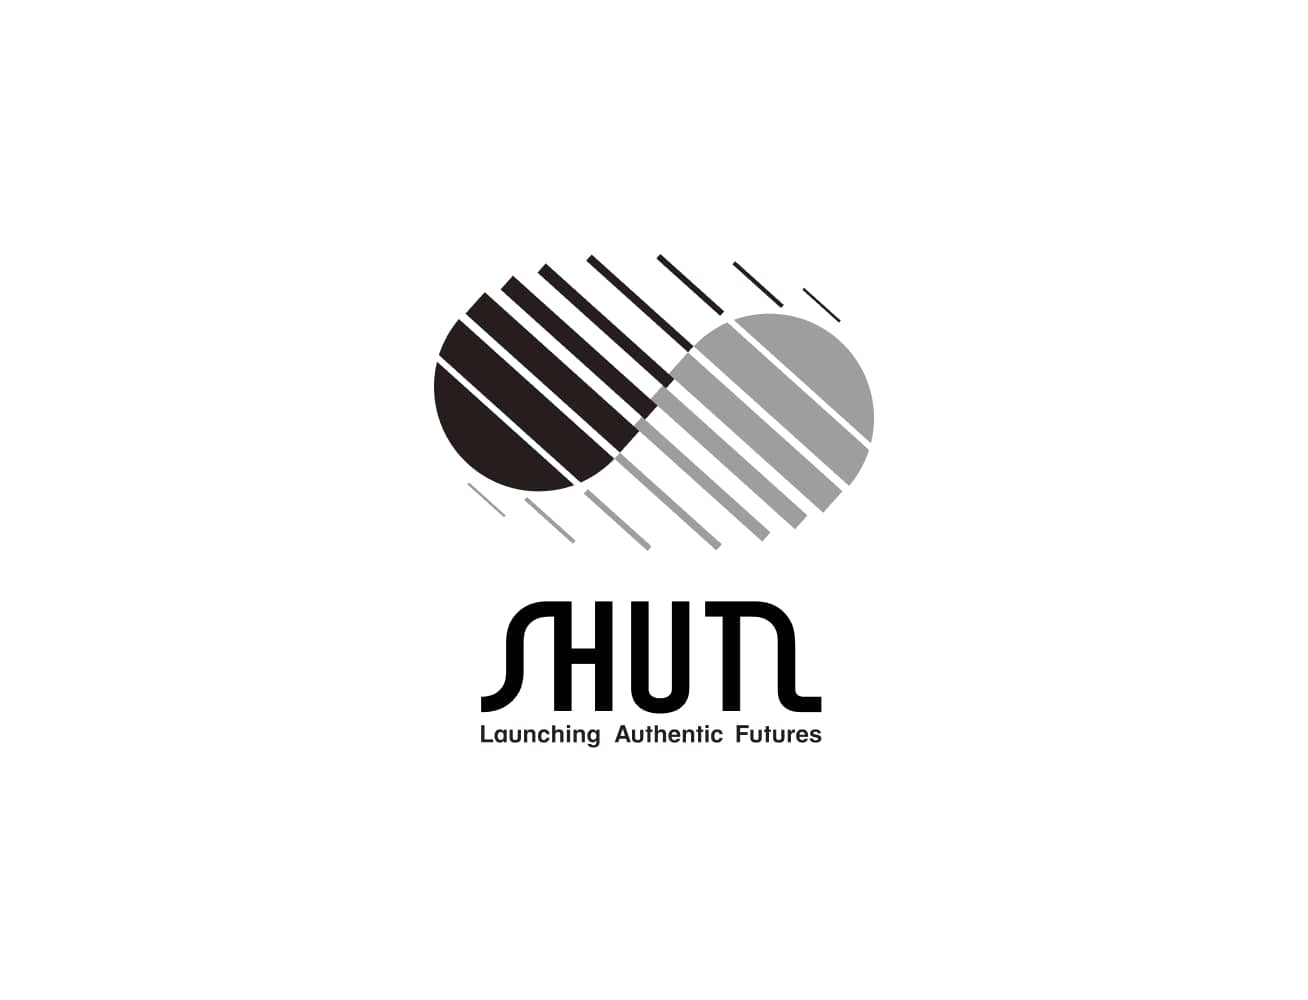 SHUTL ロゴとコンセプト「Launching Authentic Futures」